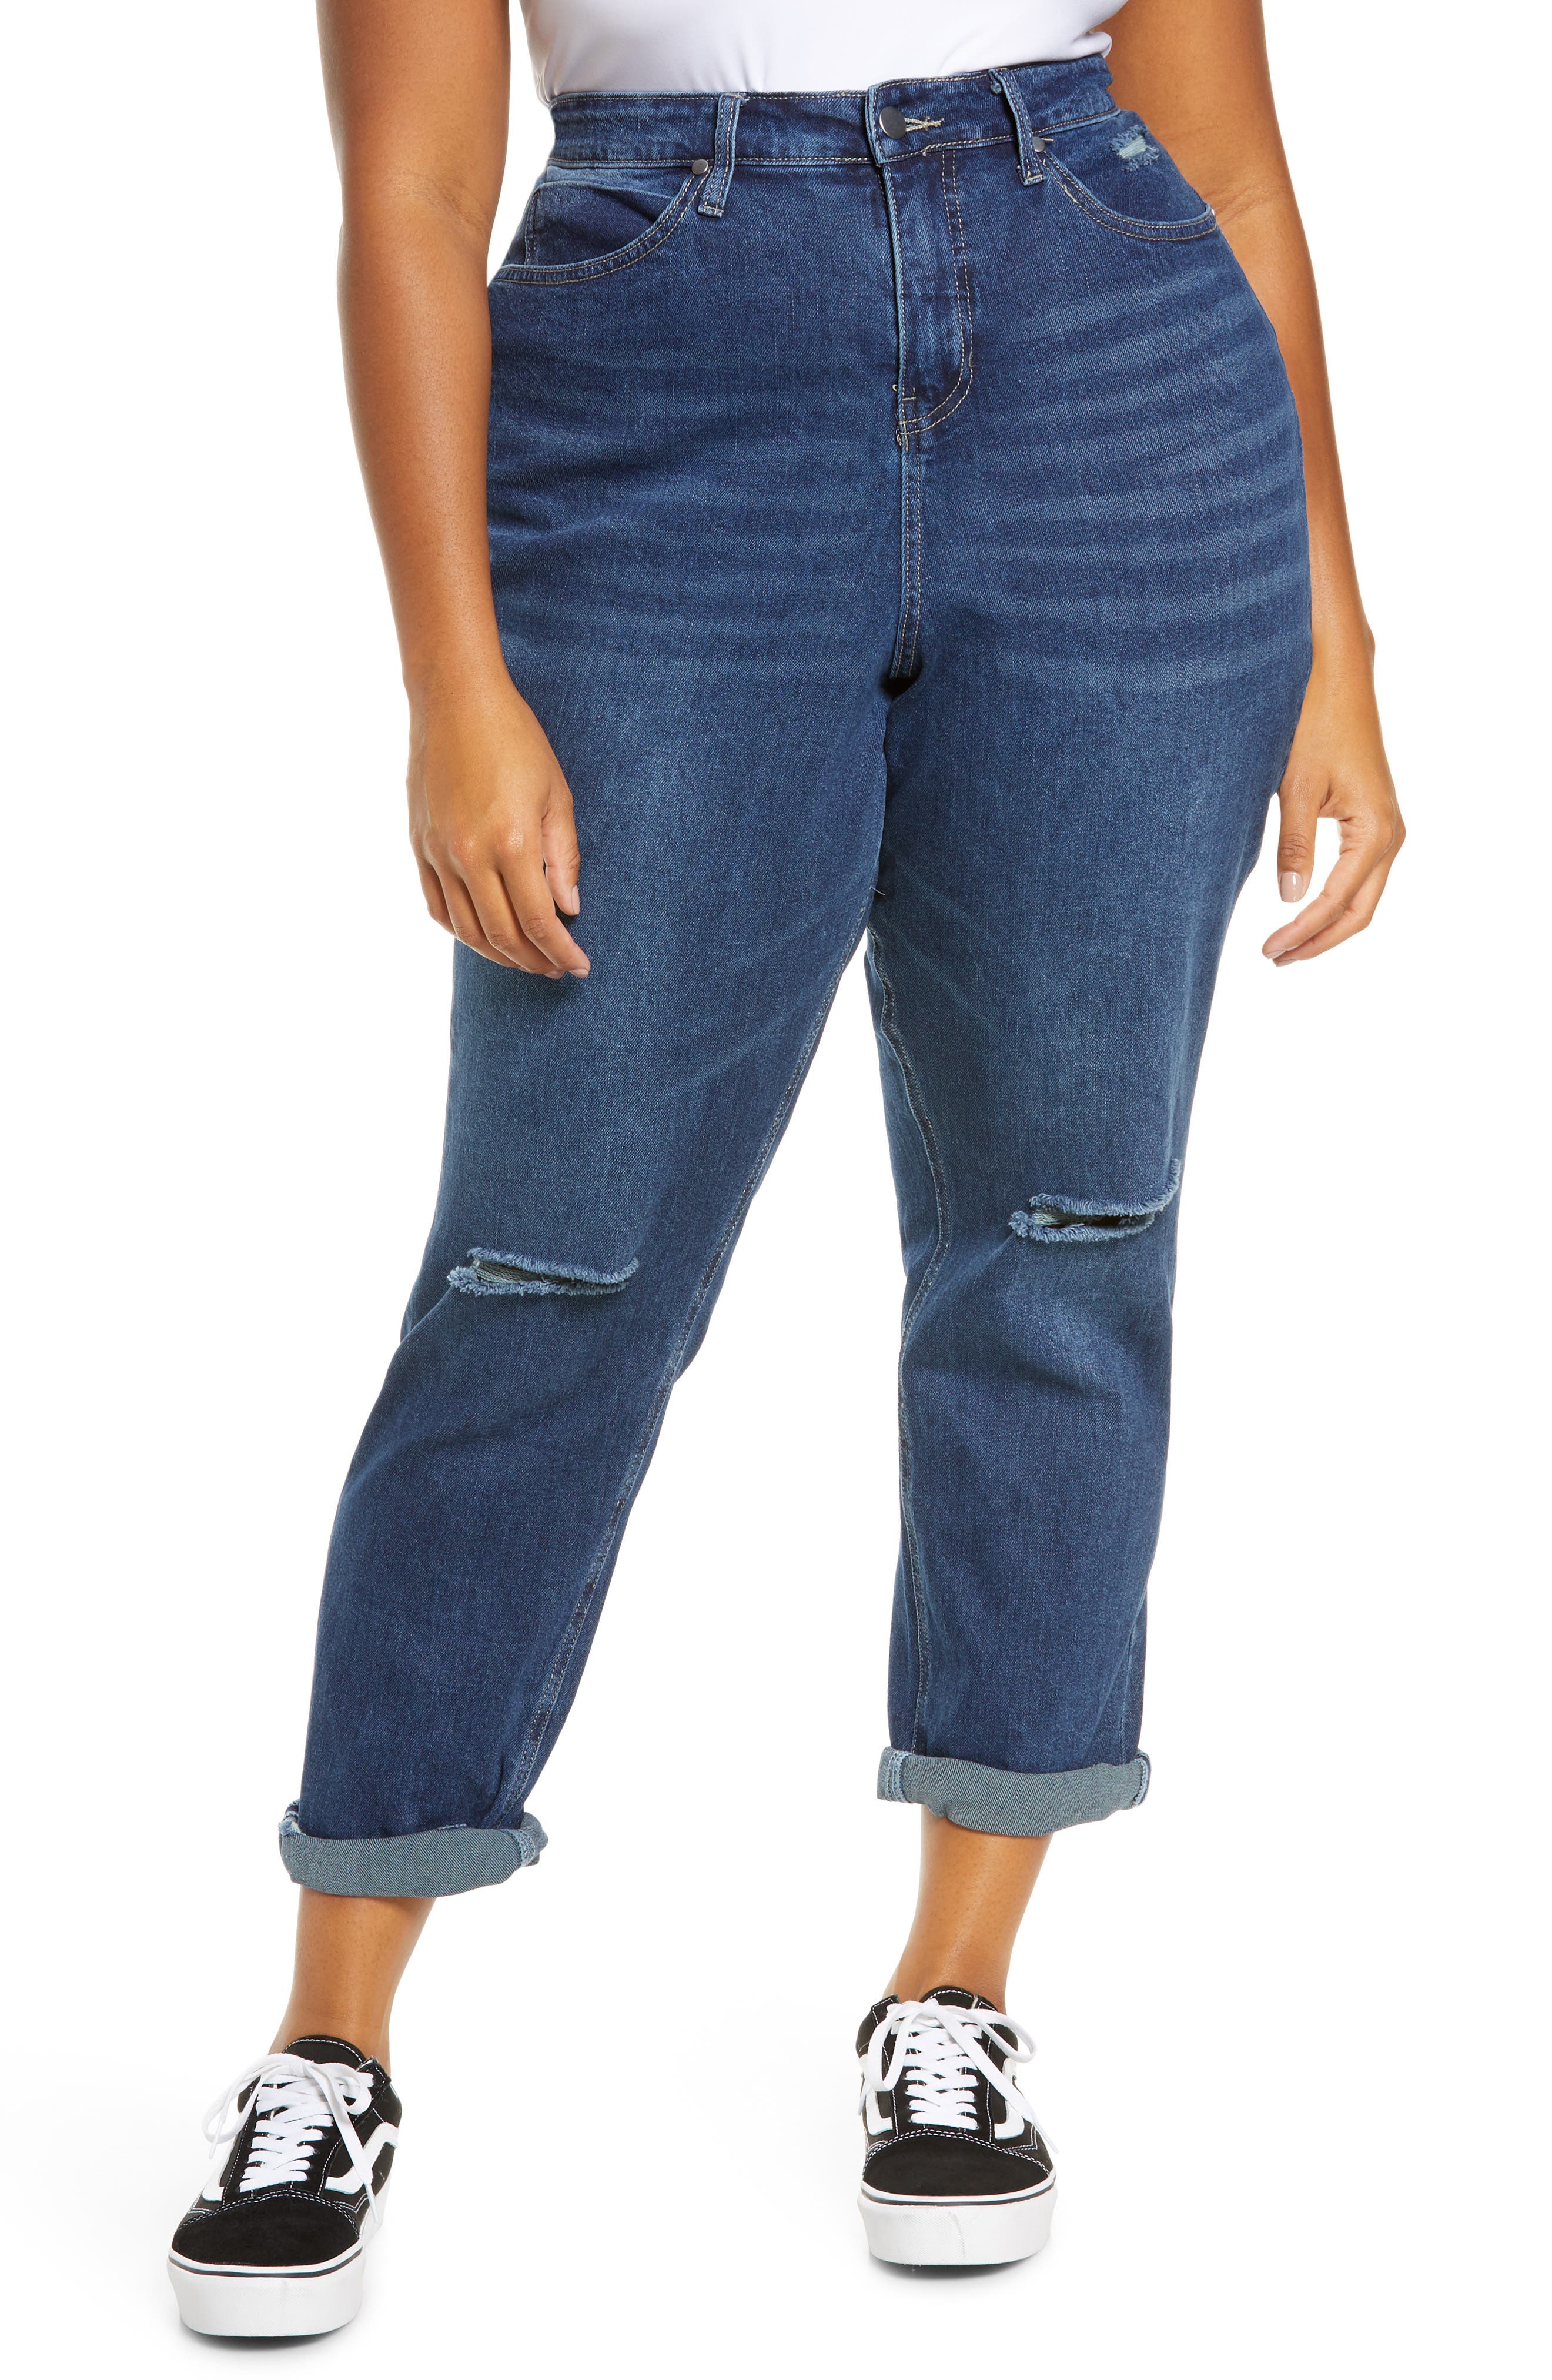 nordstrom rack plus size jeans